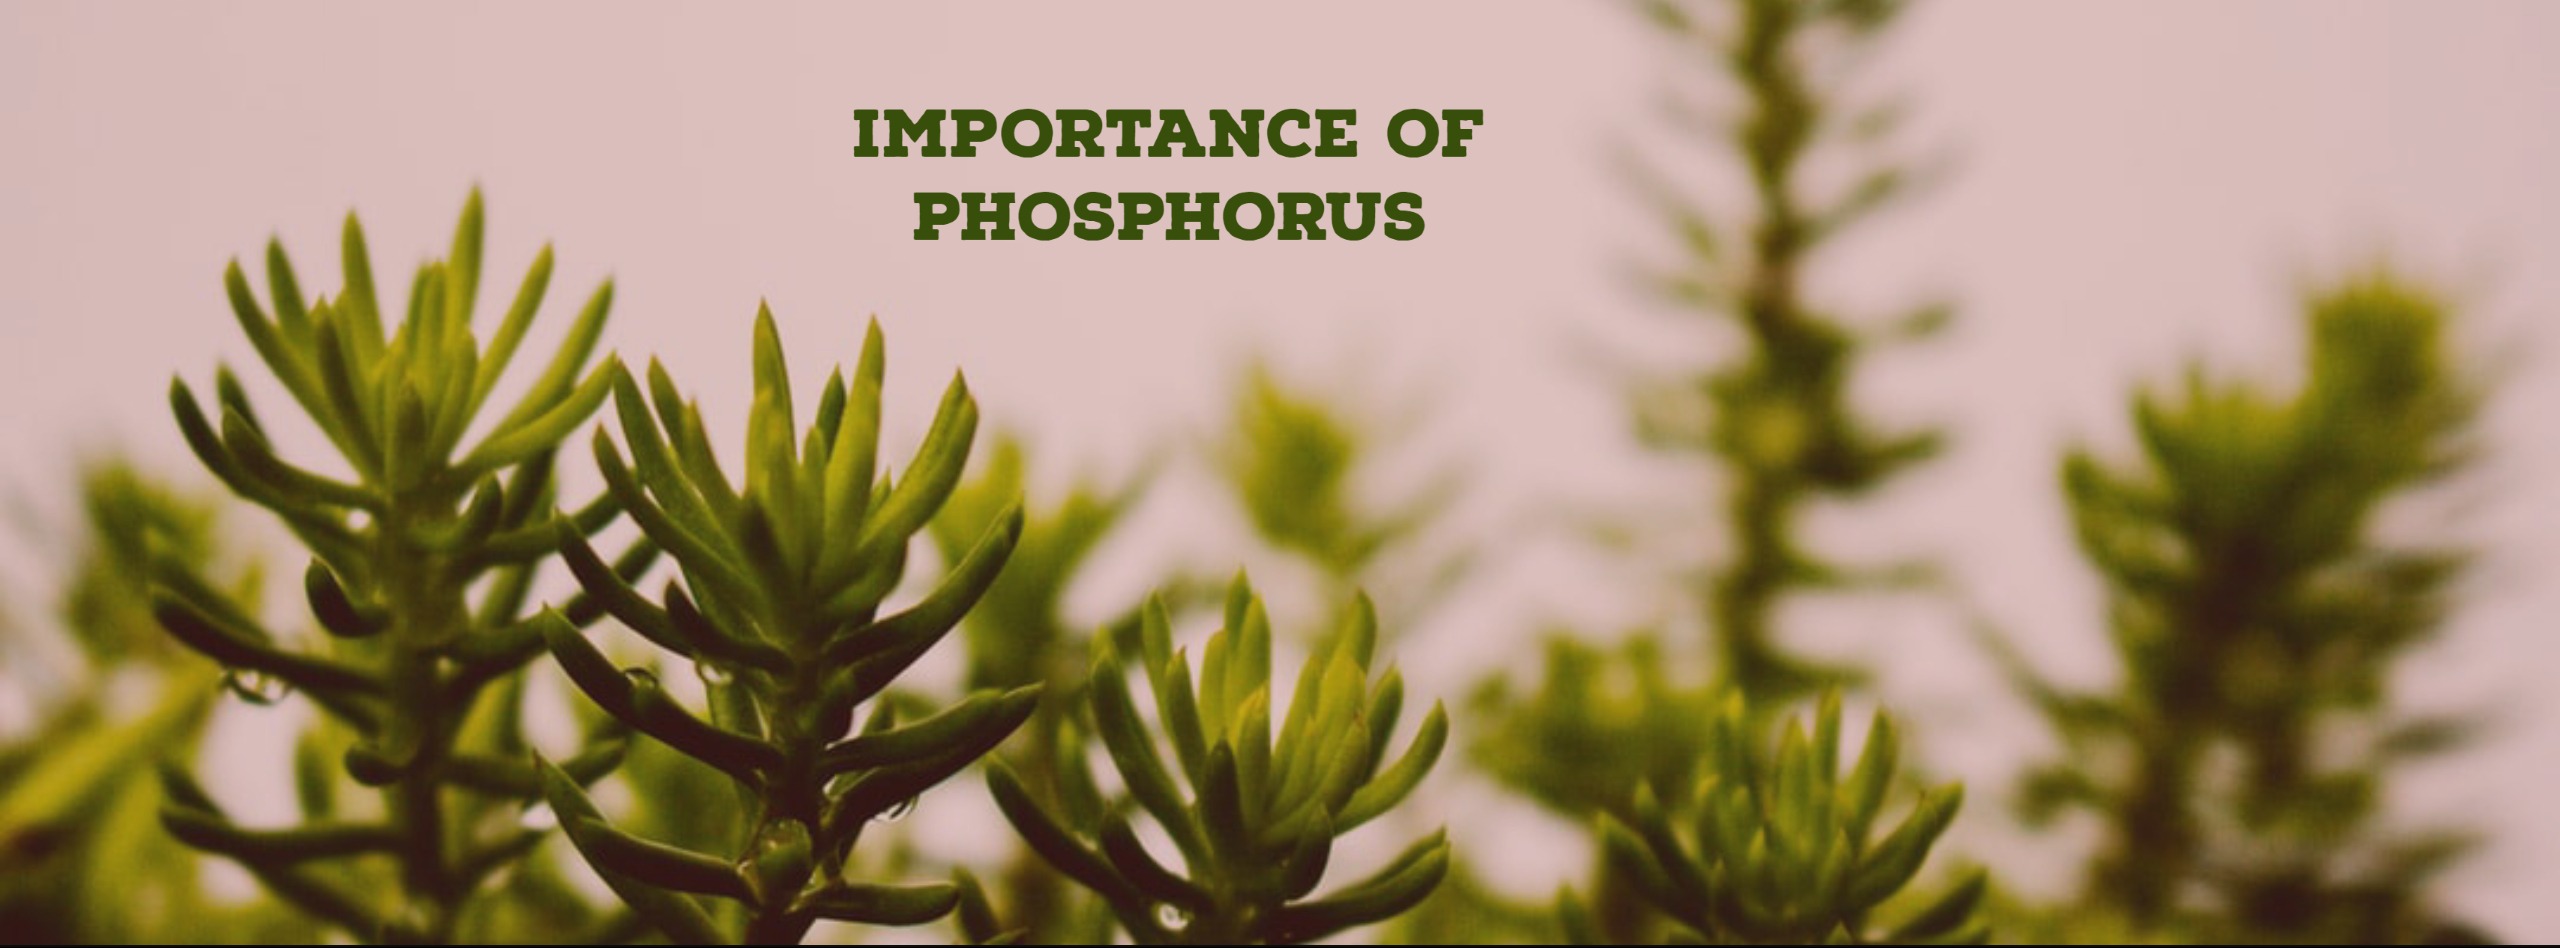 importance of phosphorus in plants